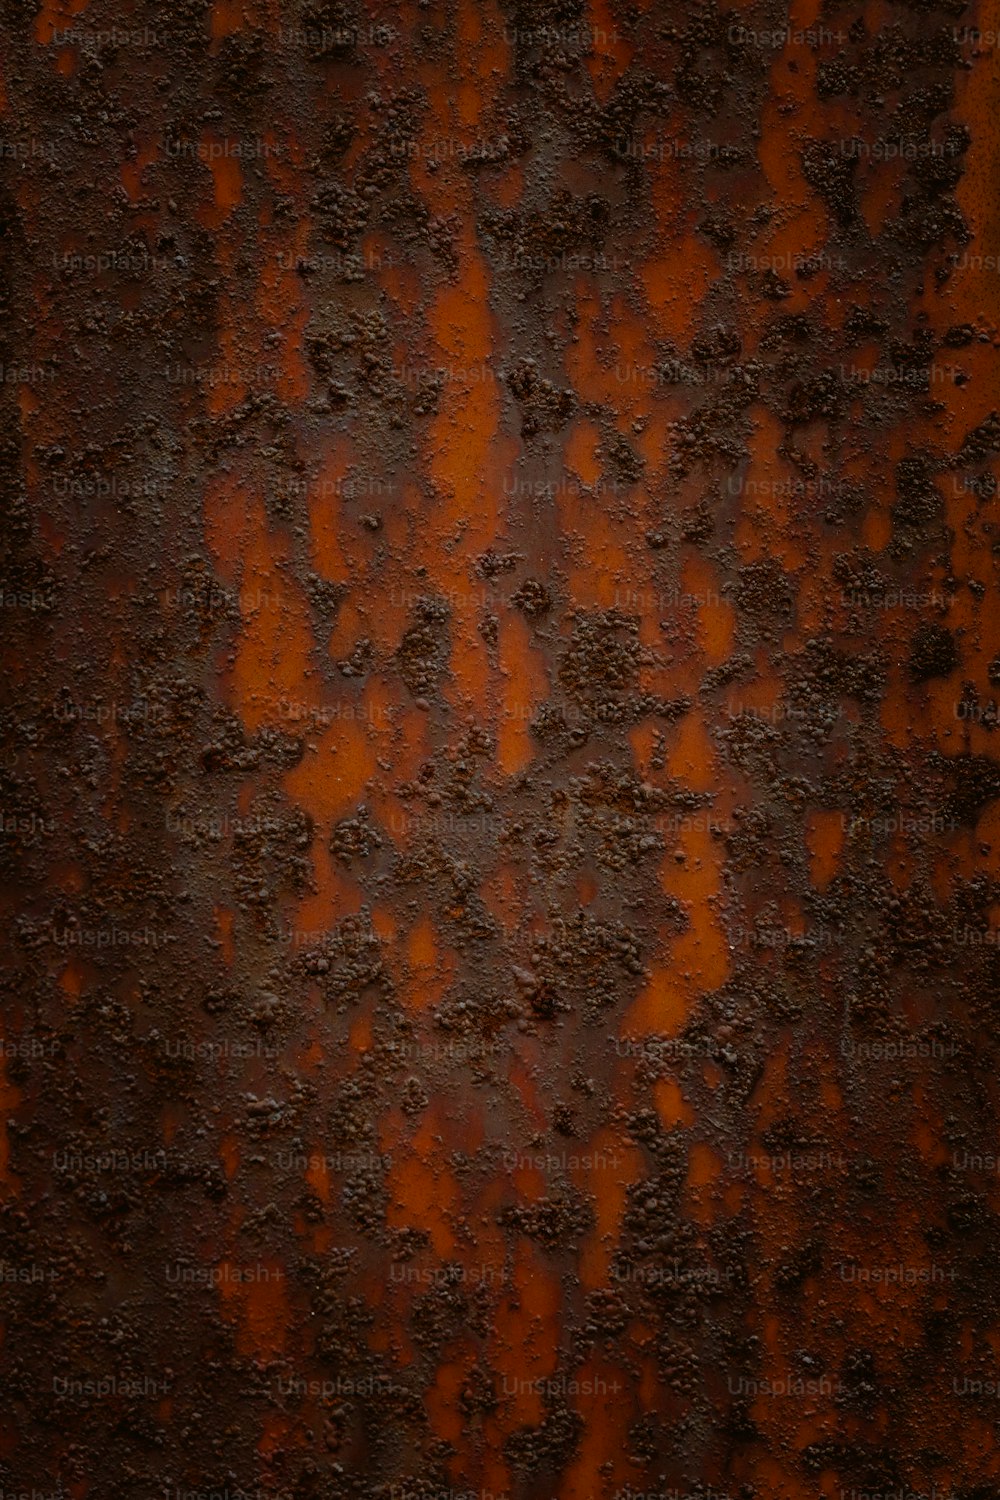 una superficie metallica arrugginita con striature arancioni